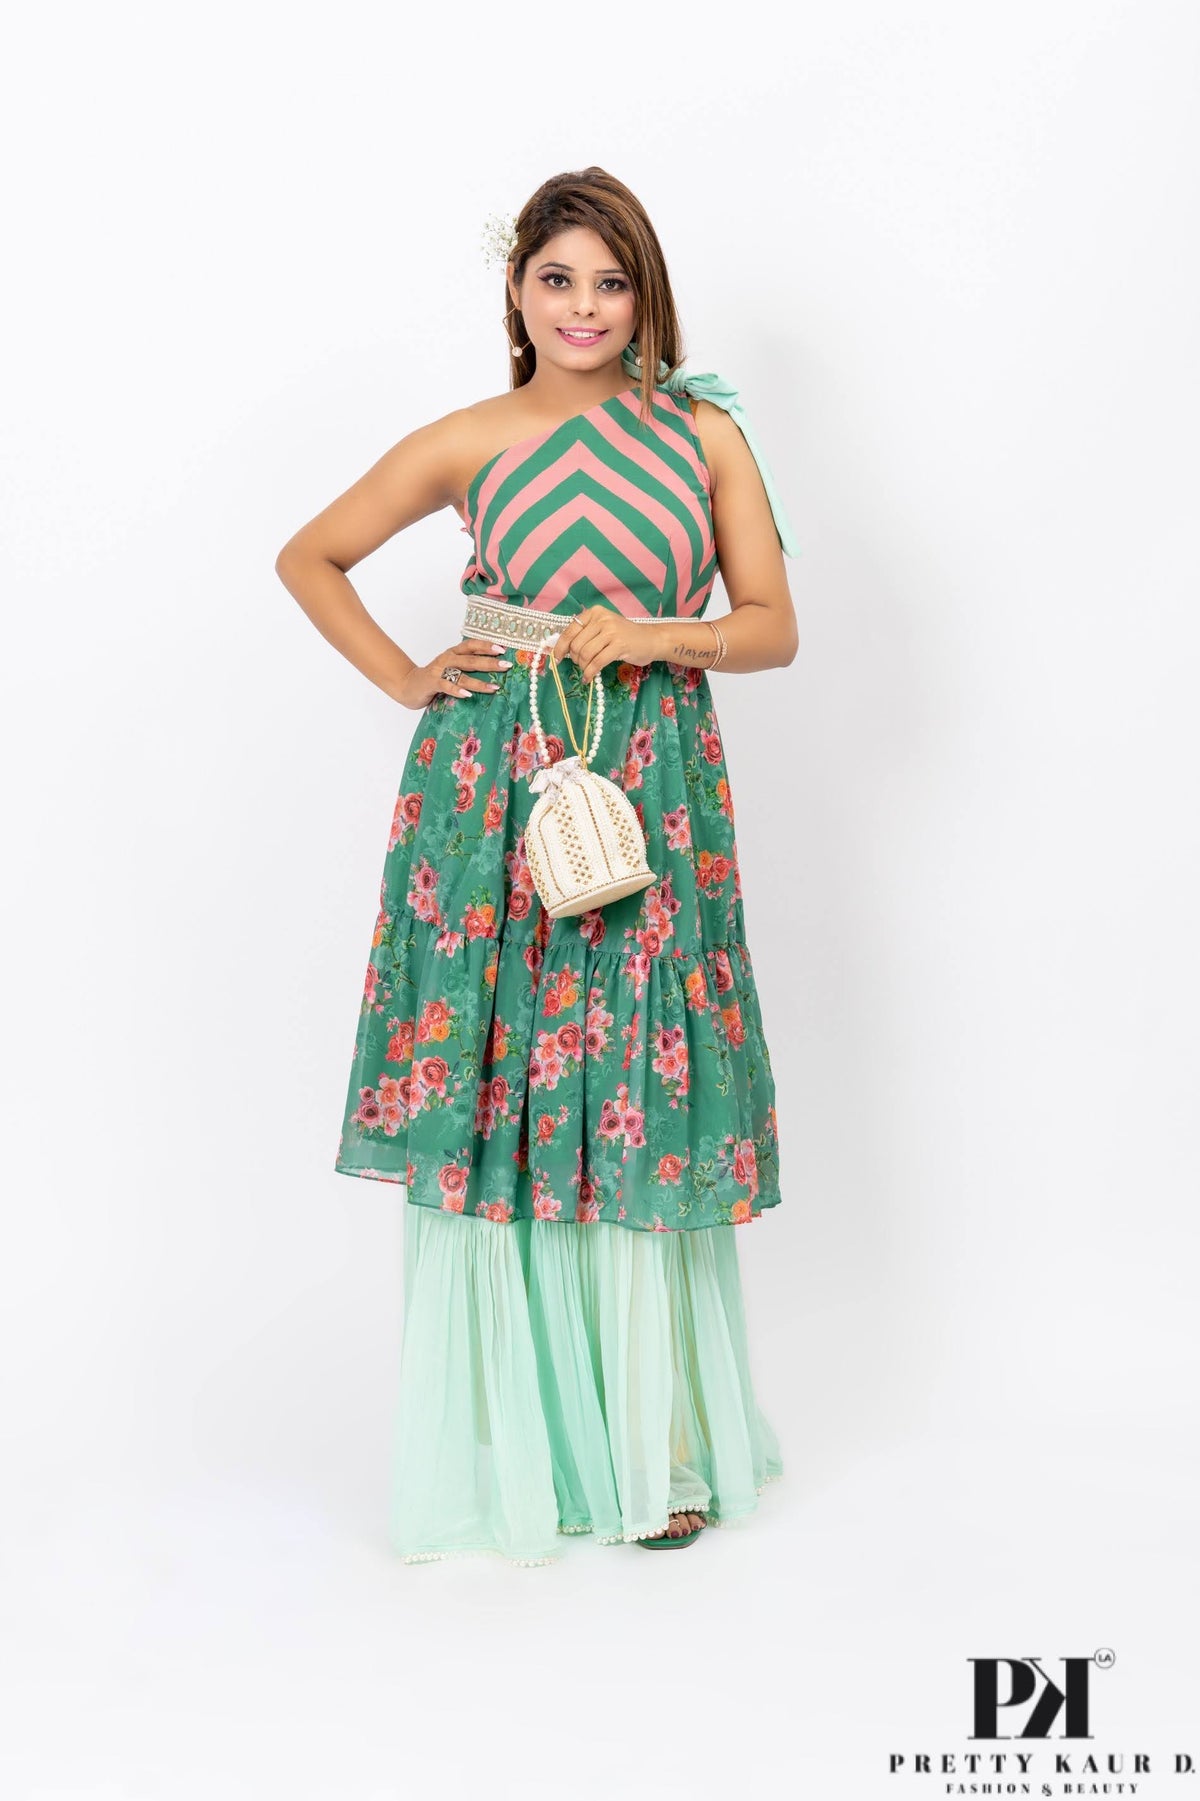 Pretty-Kaur-fashion-beauty-Green-Floral-Print-Off-Shoulder-Dress-1